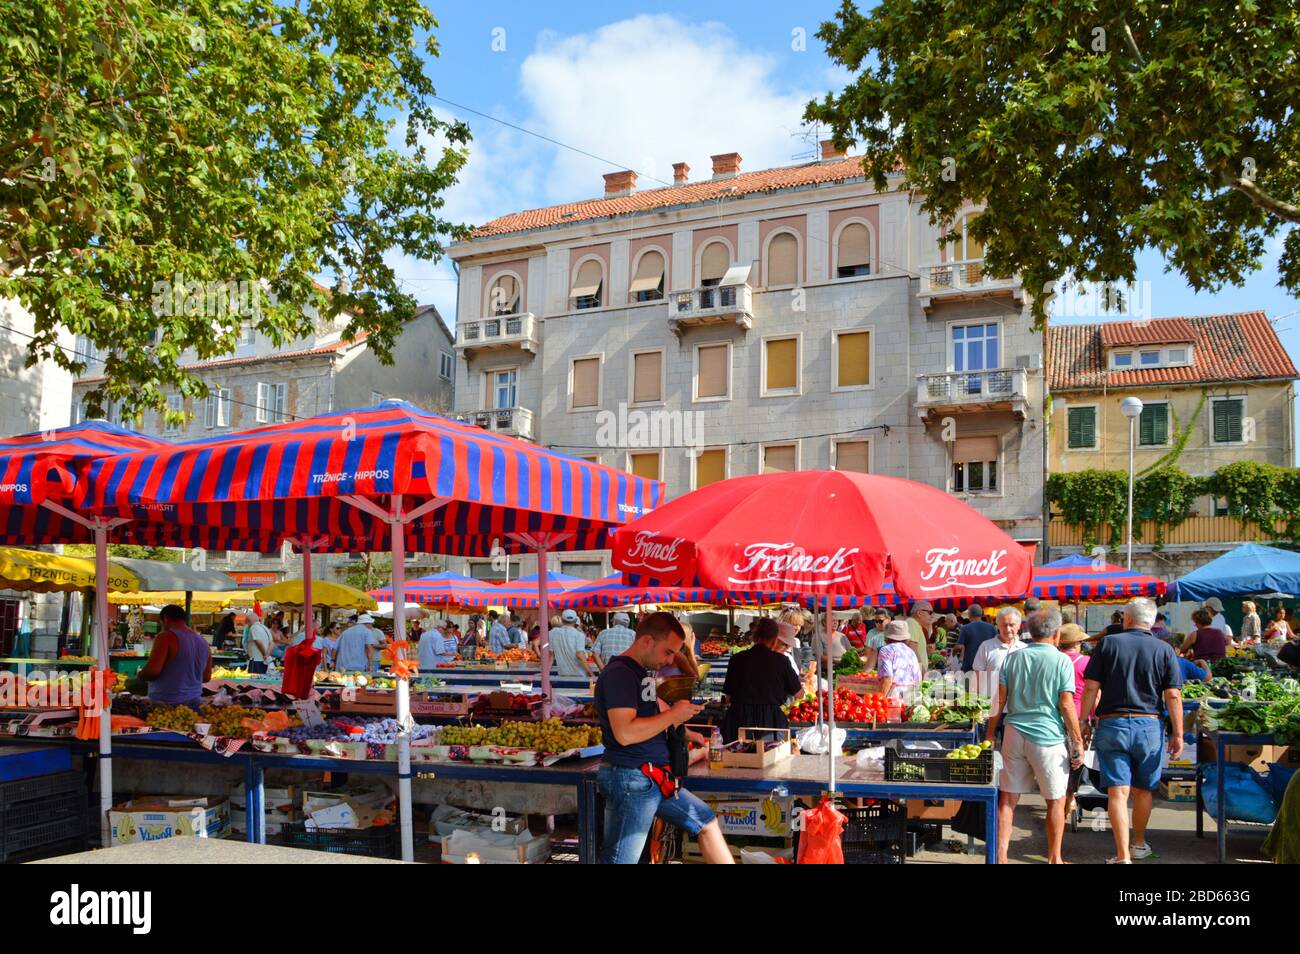 Fruit market in Split, city in Croatia Stock Photo